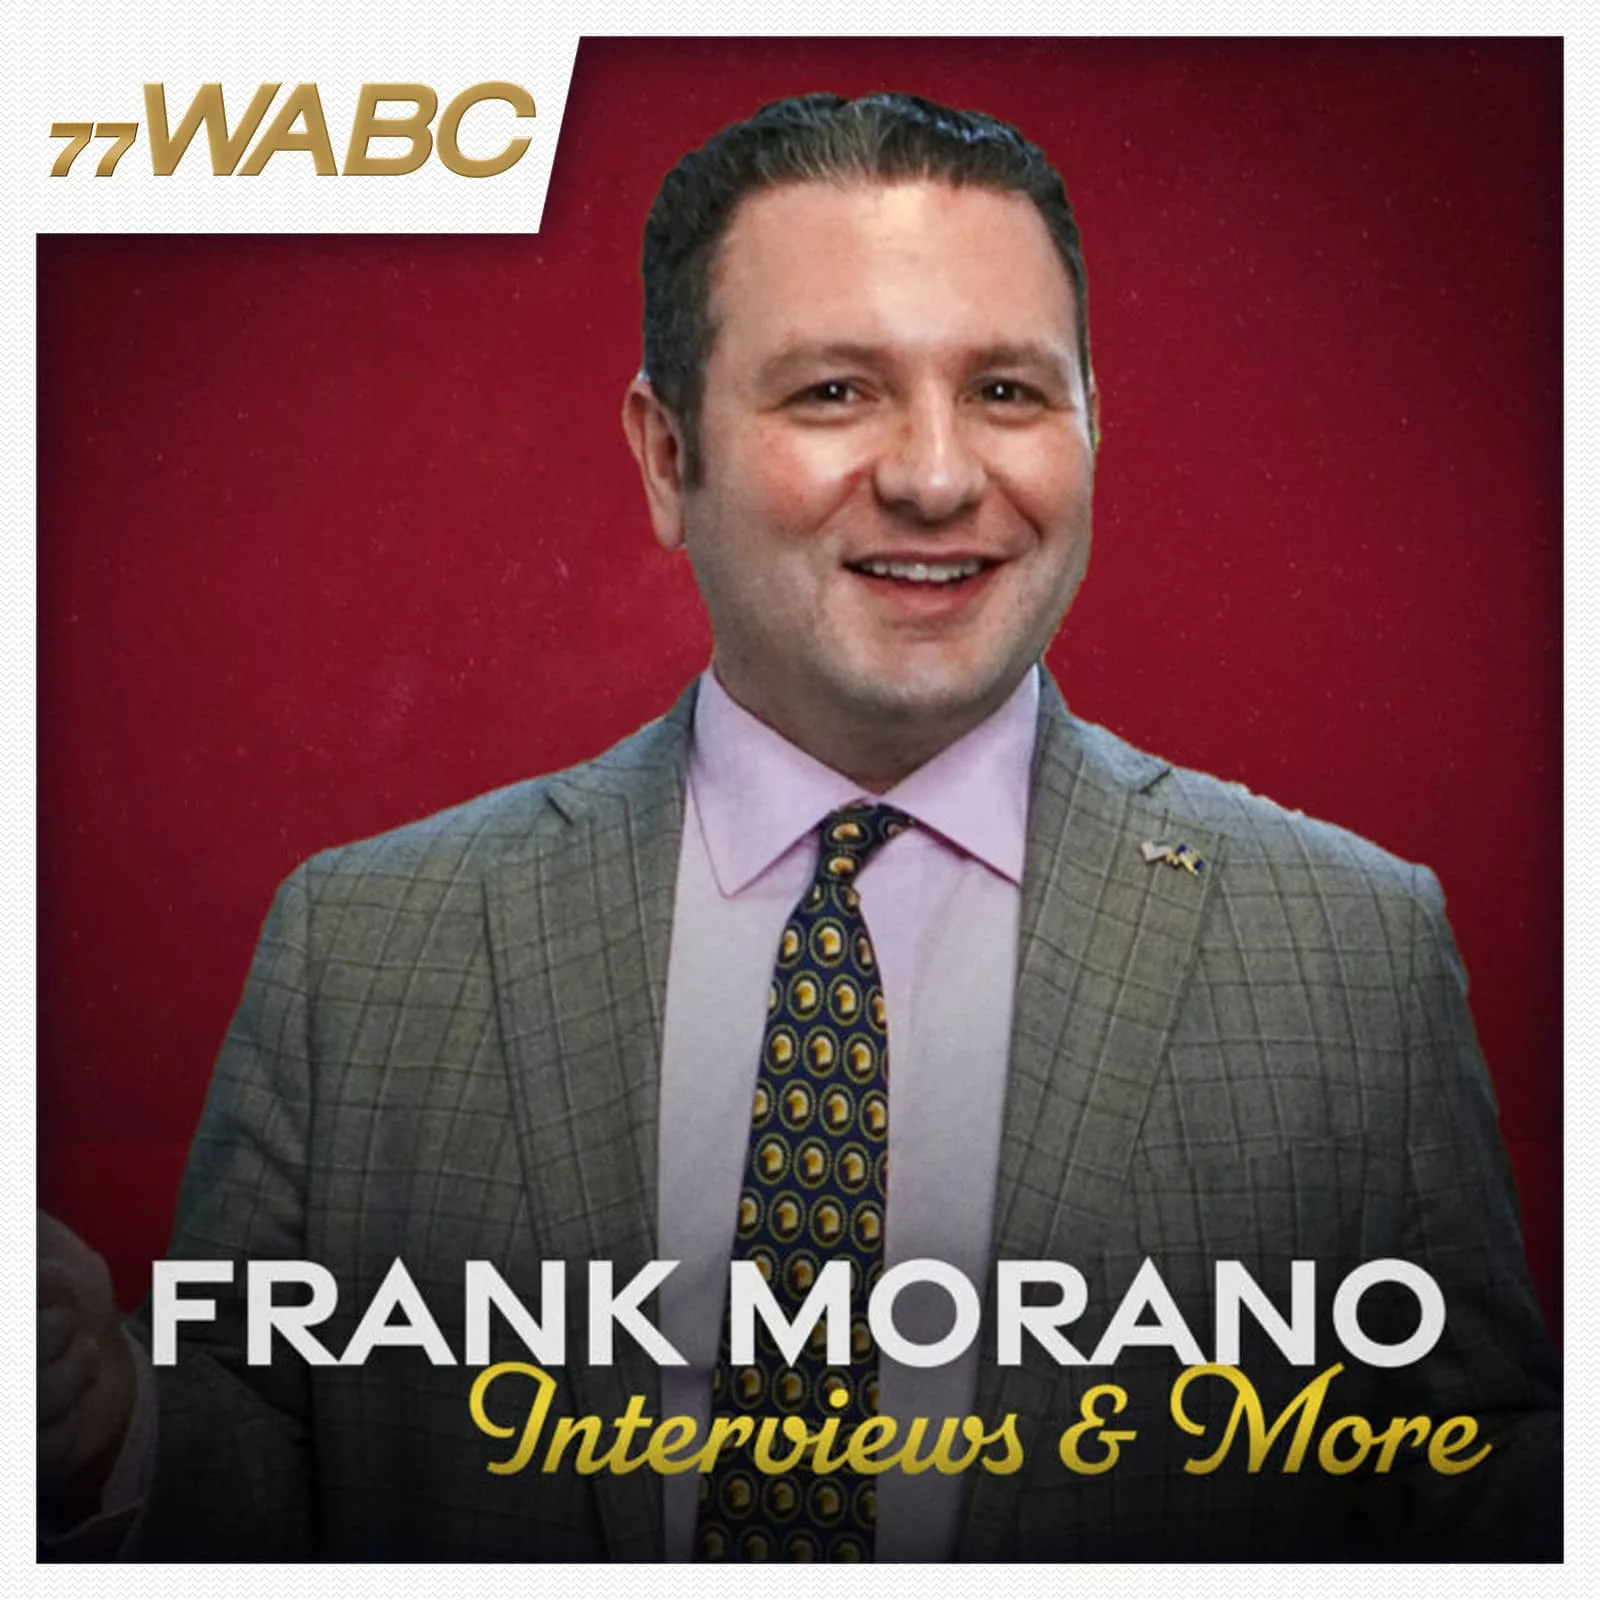 frank-morano-interviews-and-more-podcast-new-logo888286